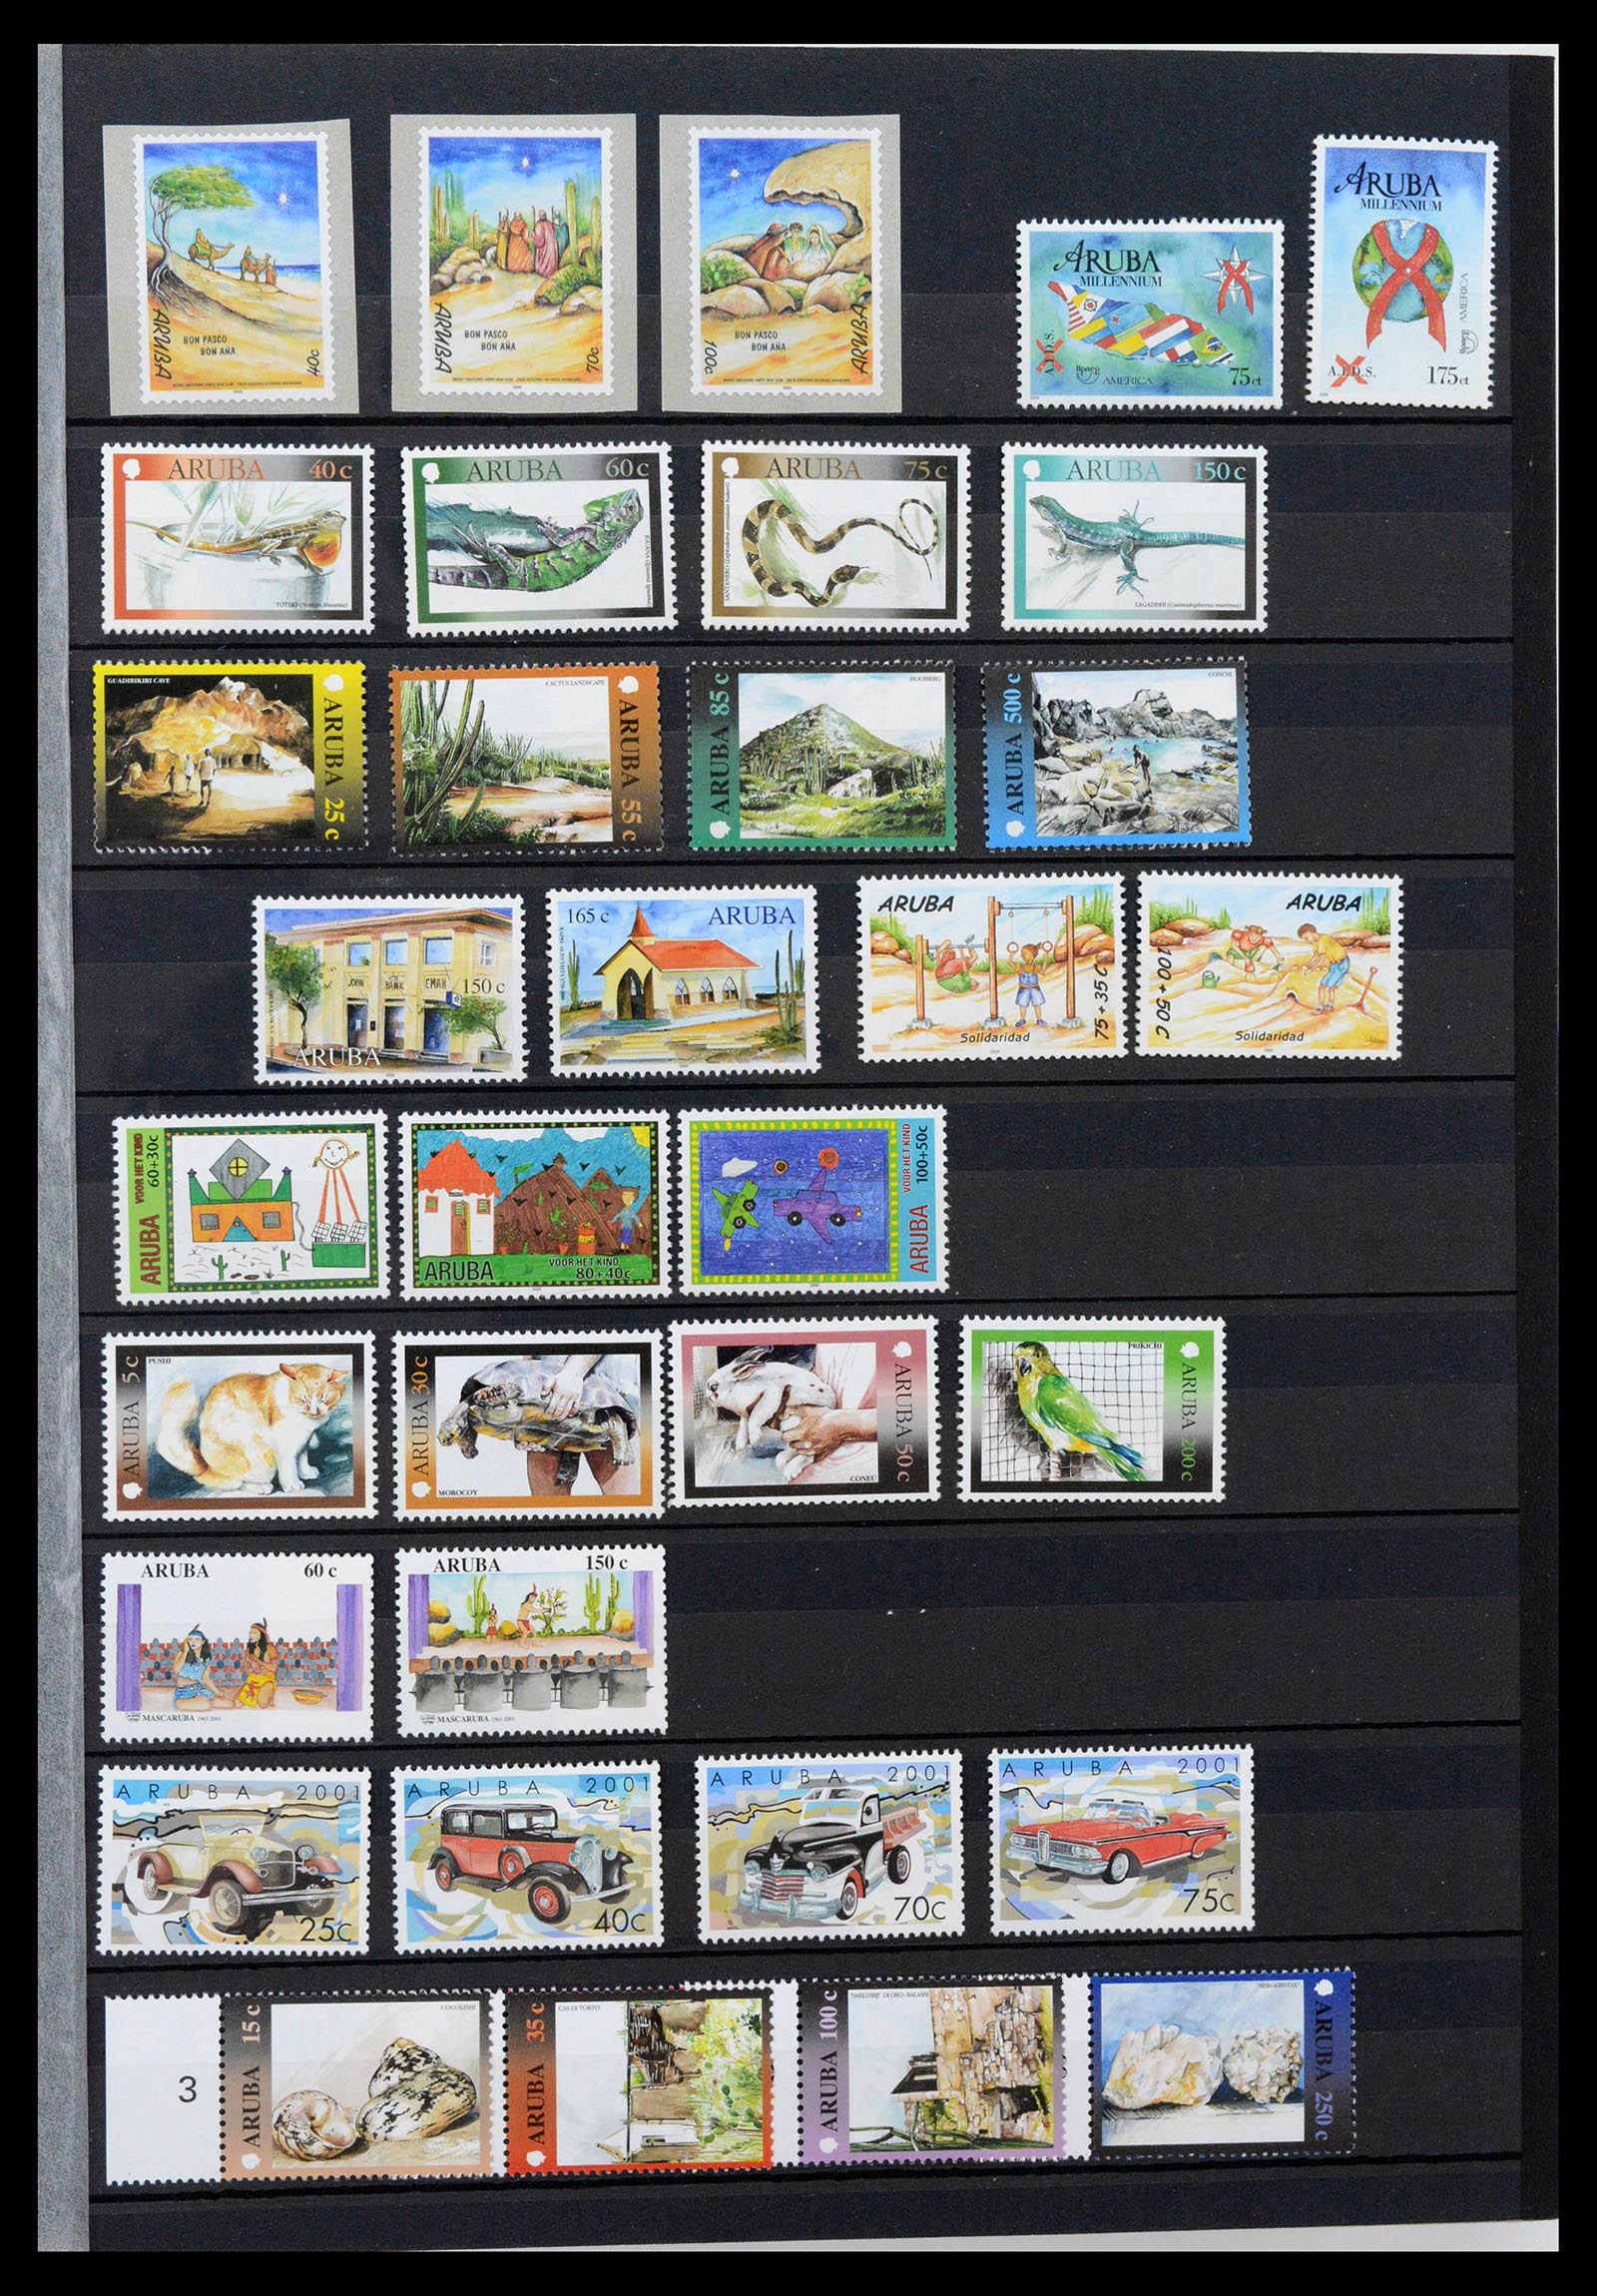 39027 0009 - Stamp collection 39027 Curaçao/Antilles/Aruba 1873-2009.